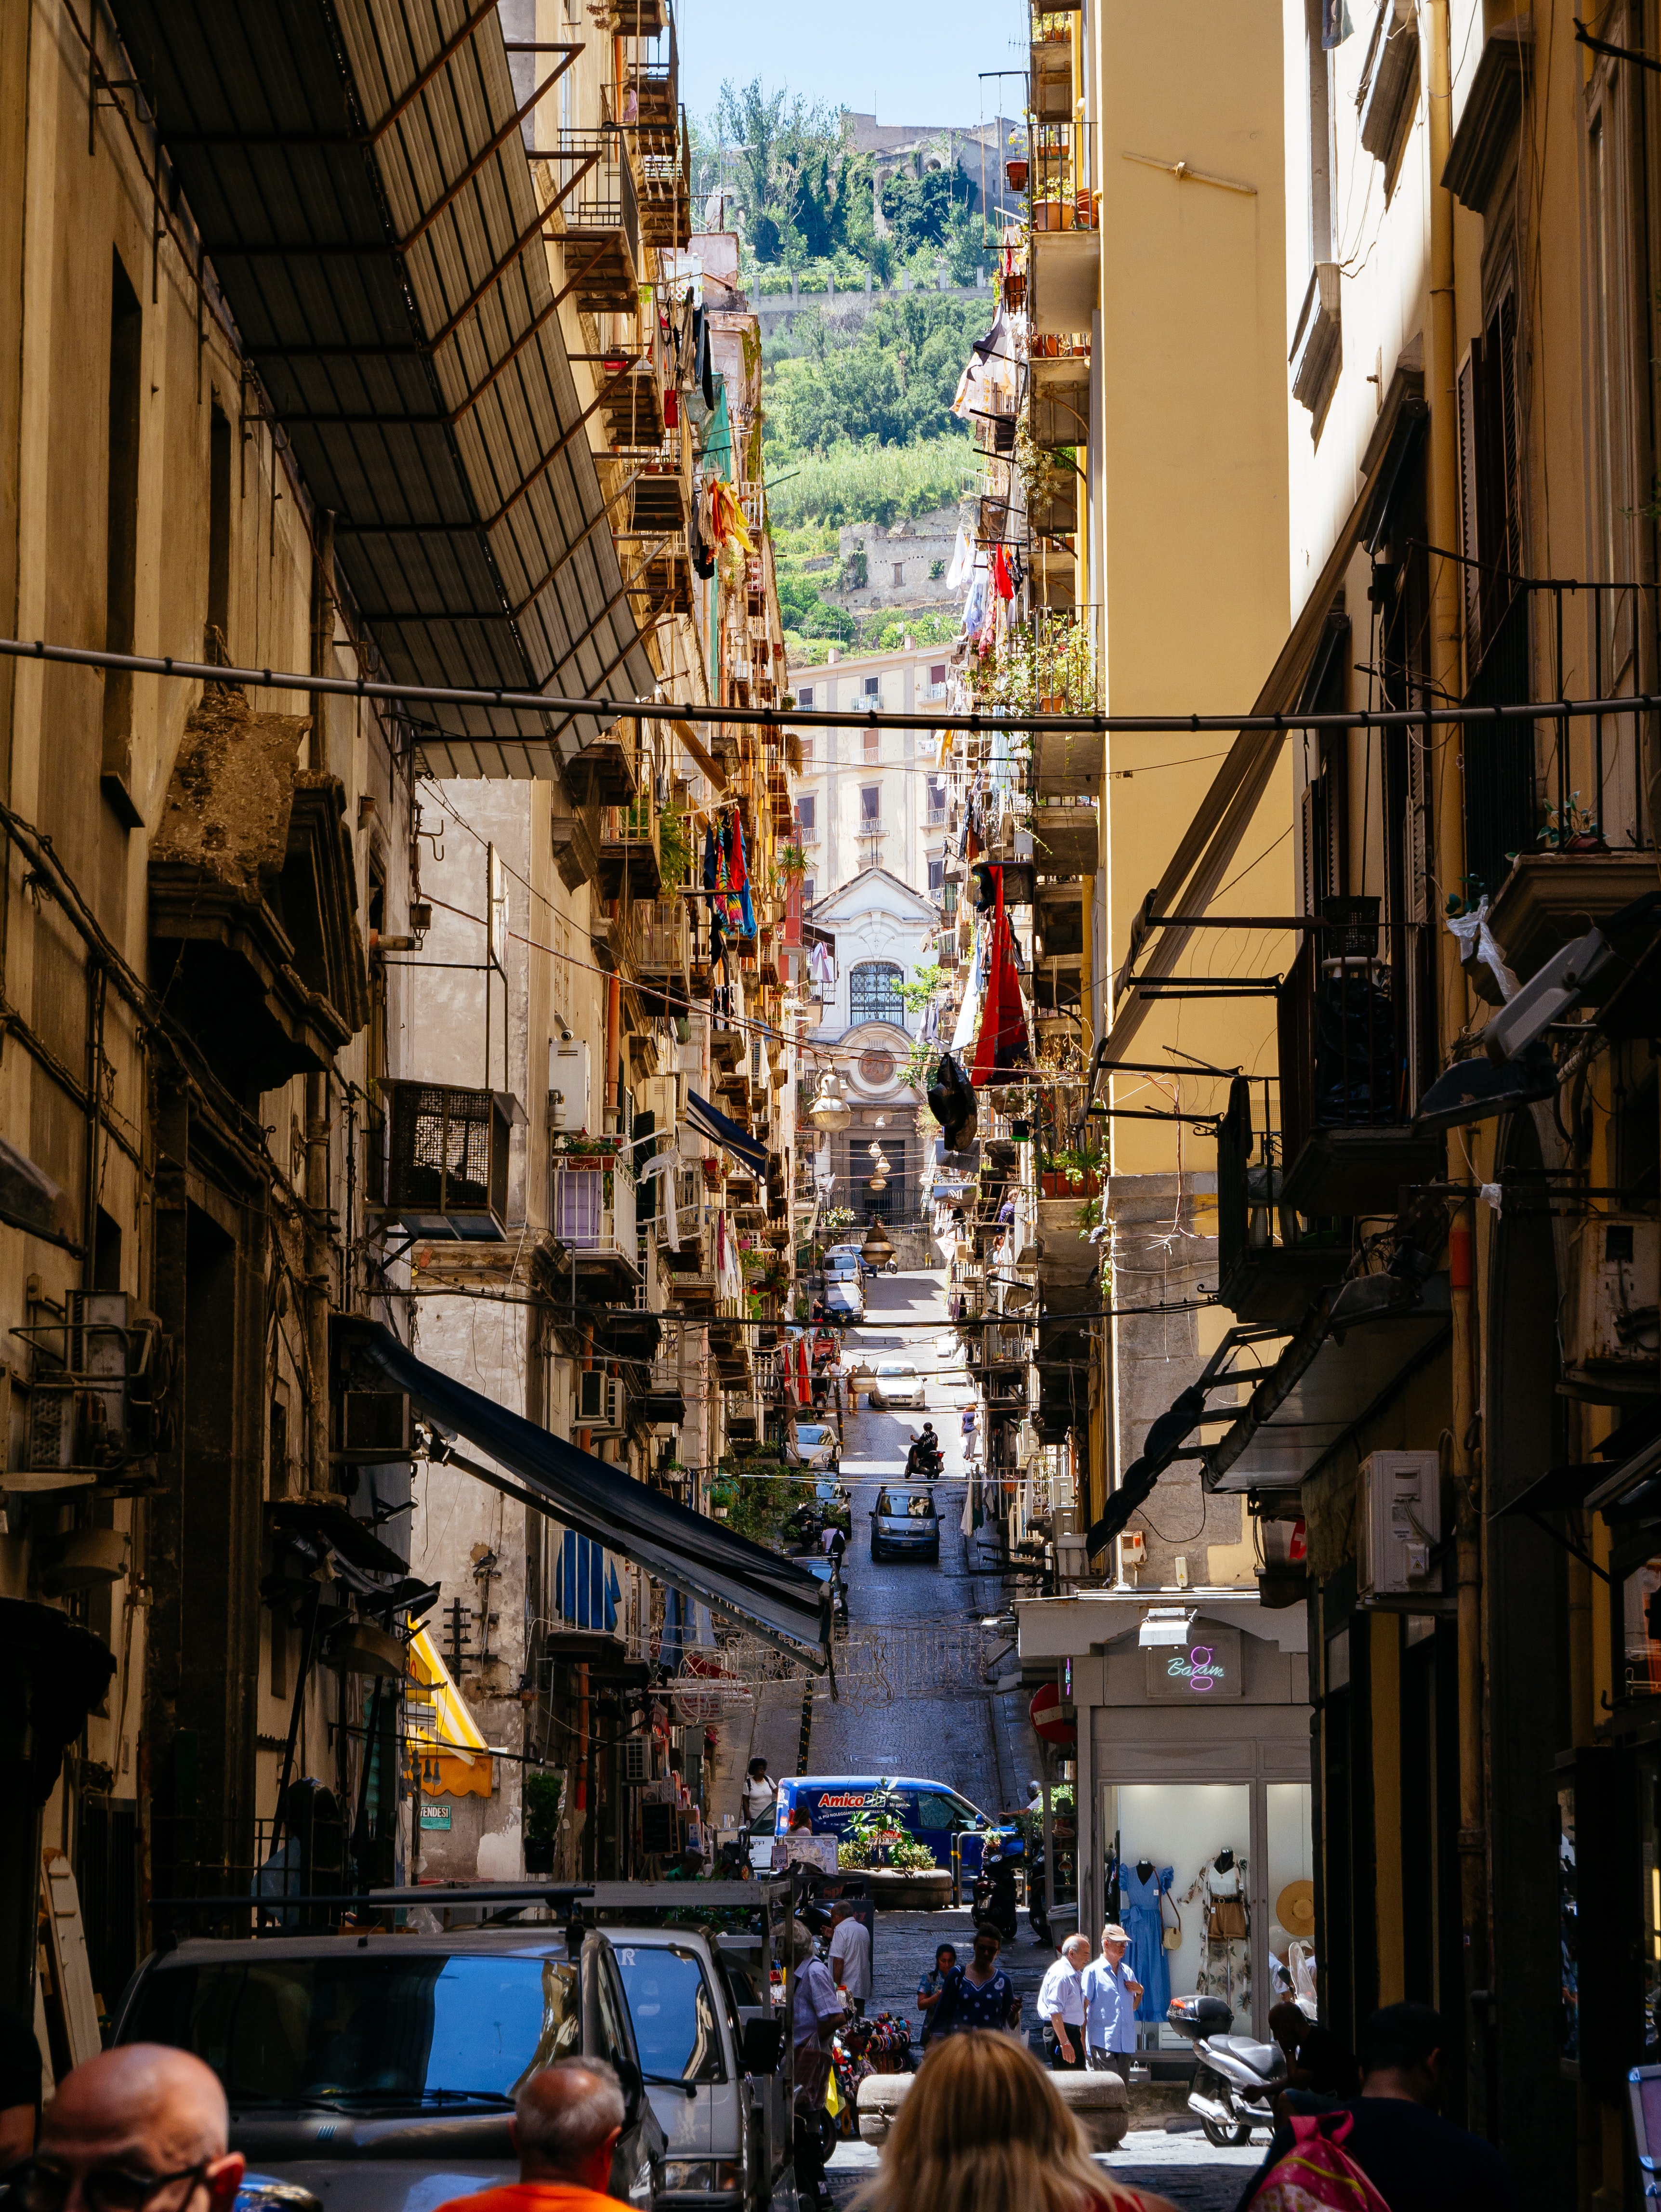 Naples historic centre